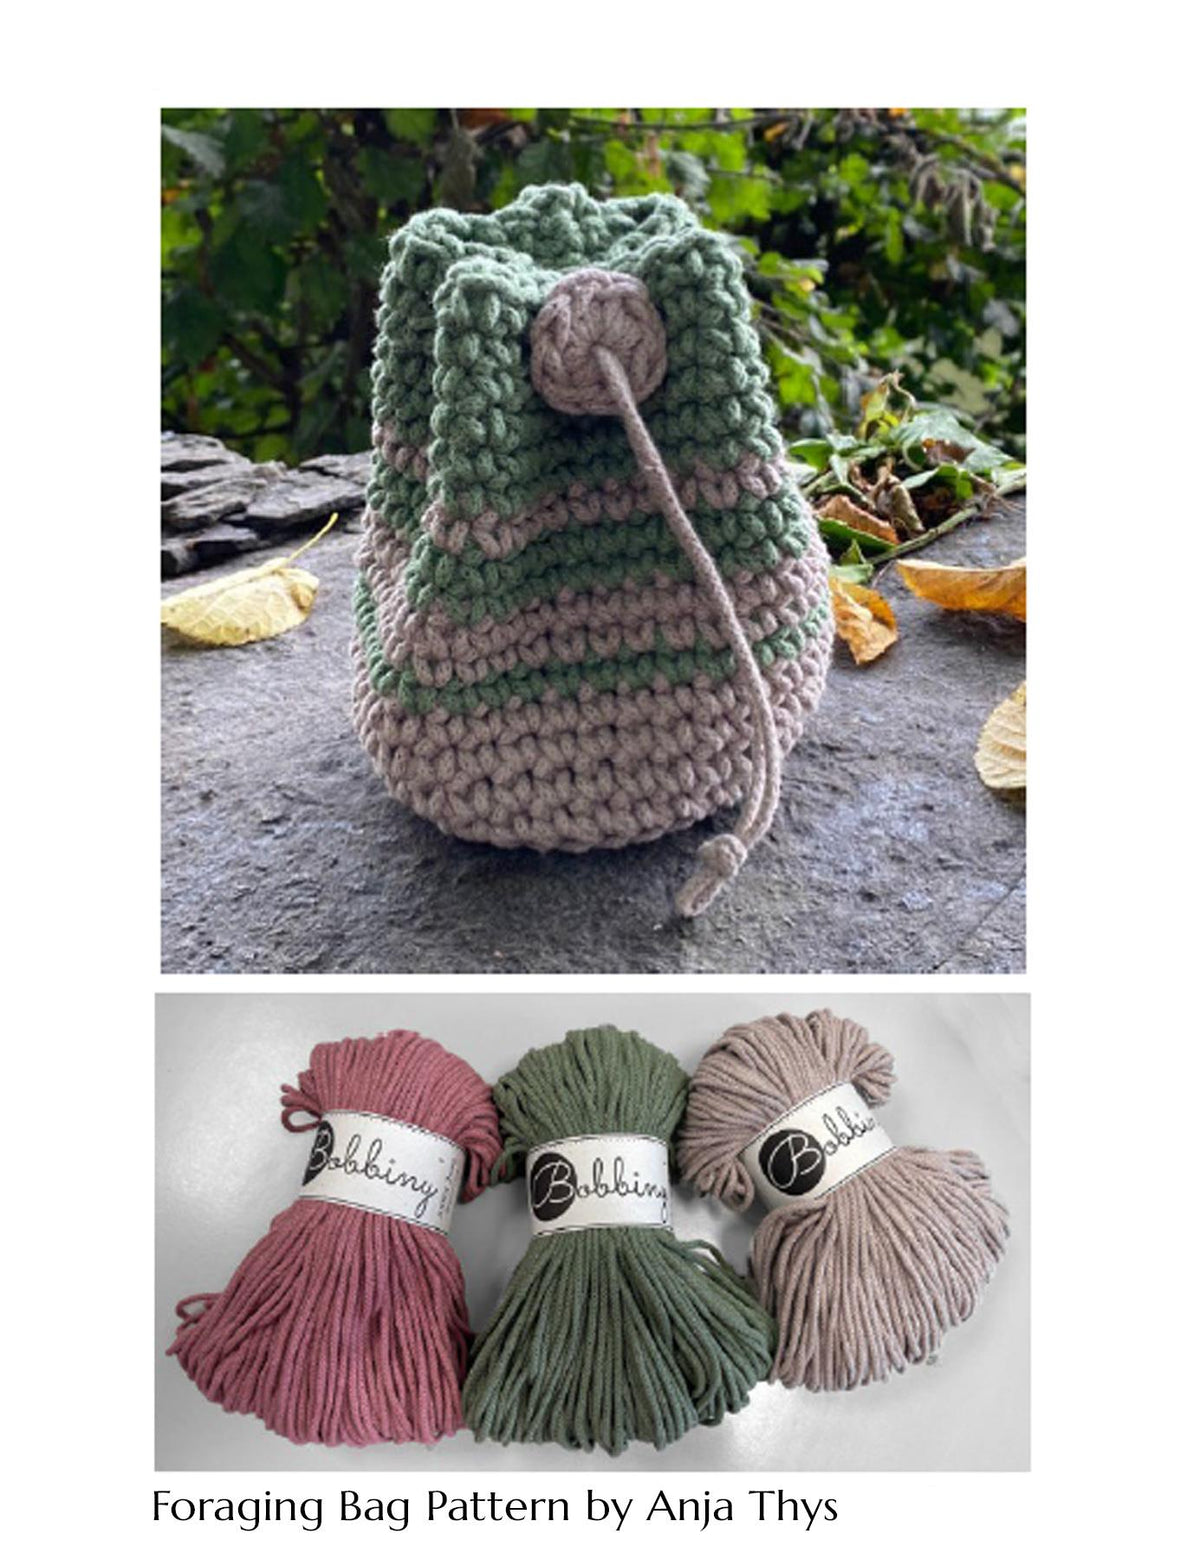 A Really Good Yarn: Knitting Bags